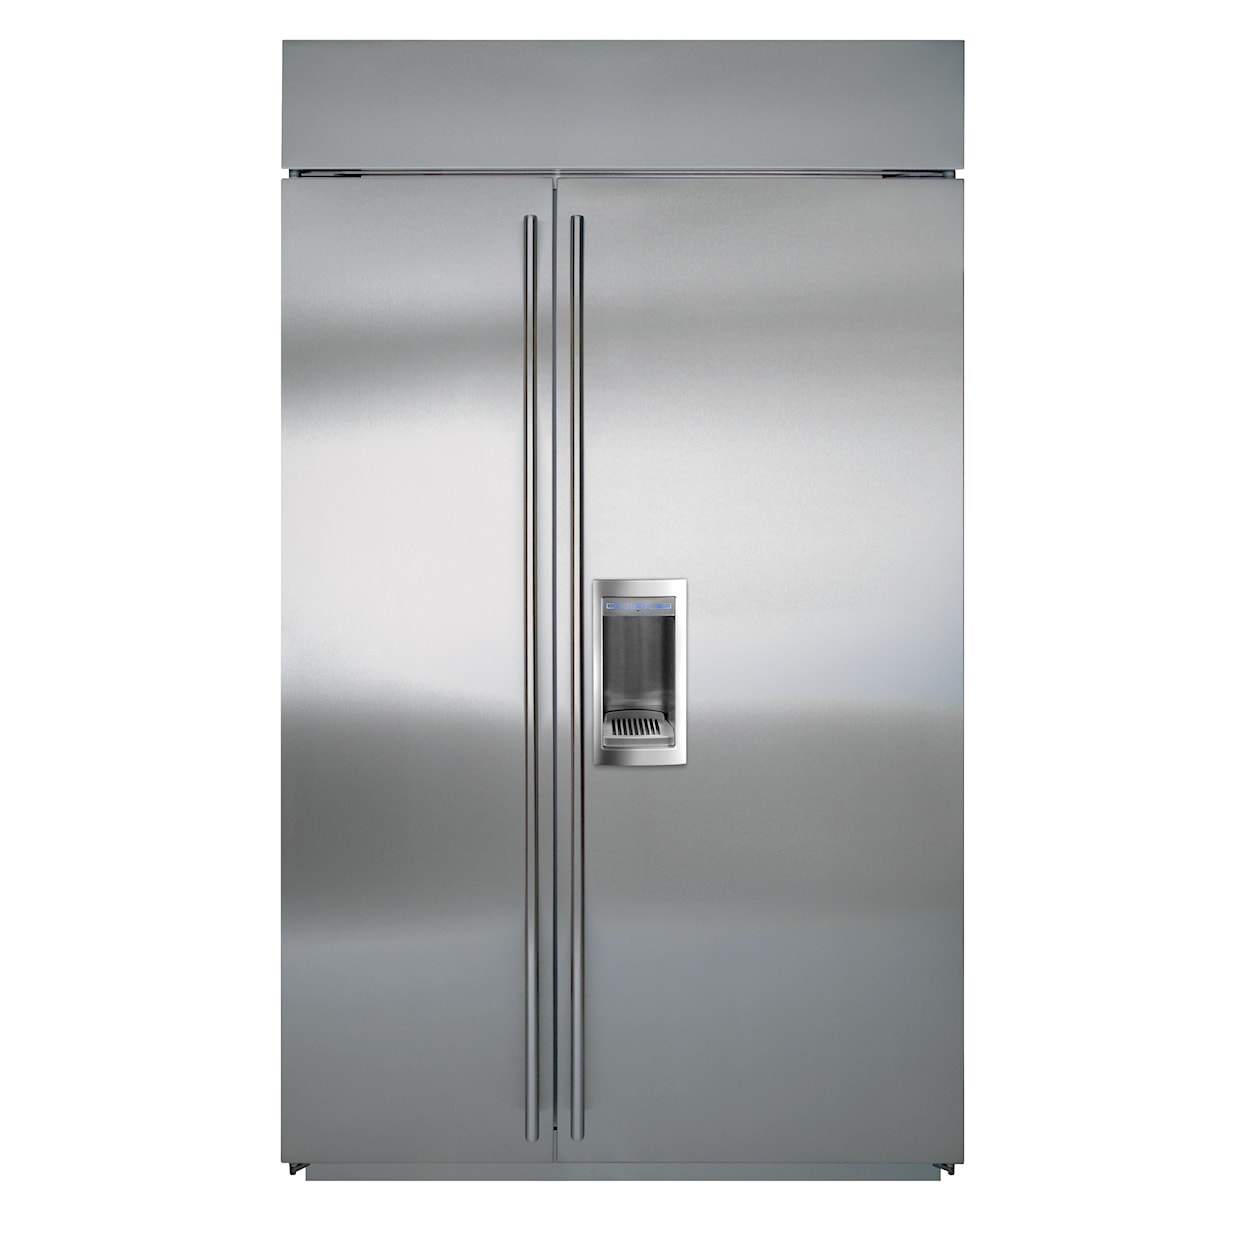 Sub-Zero Built-In Refrigeration Side-by-Side Refrigerator